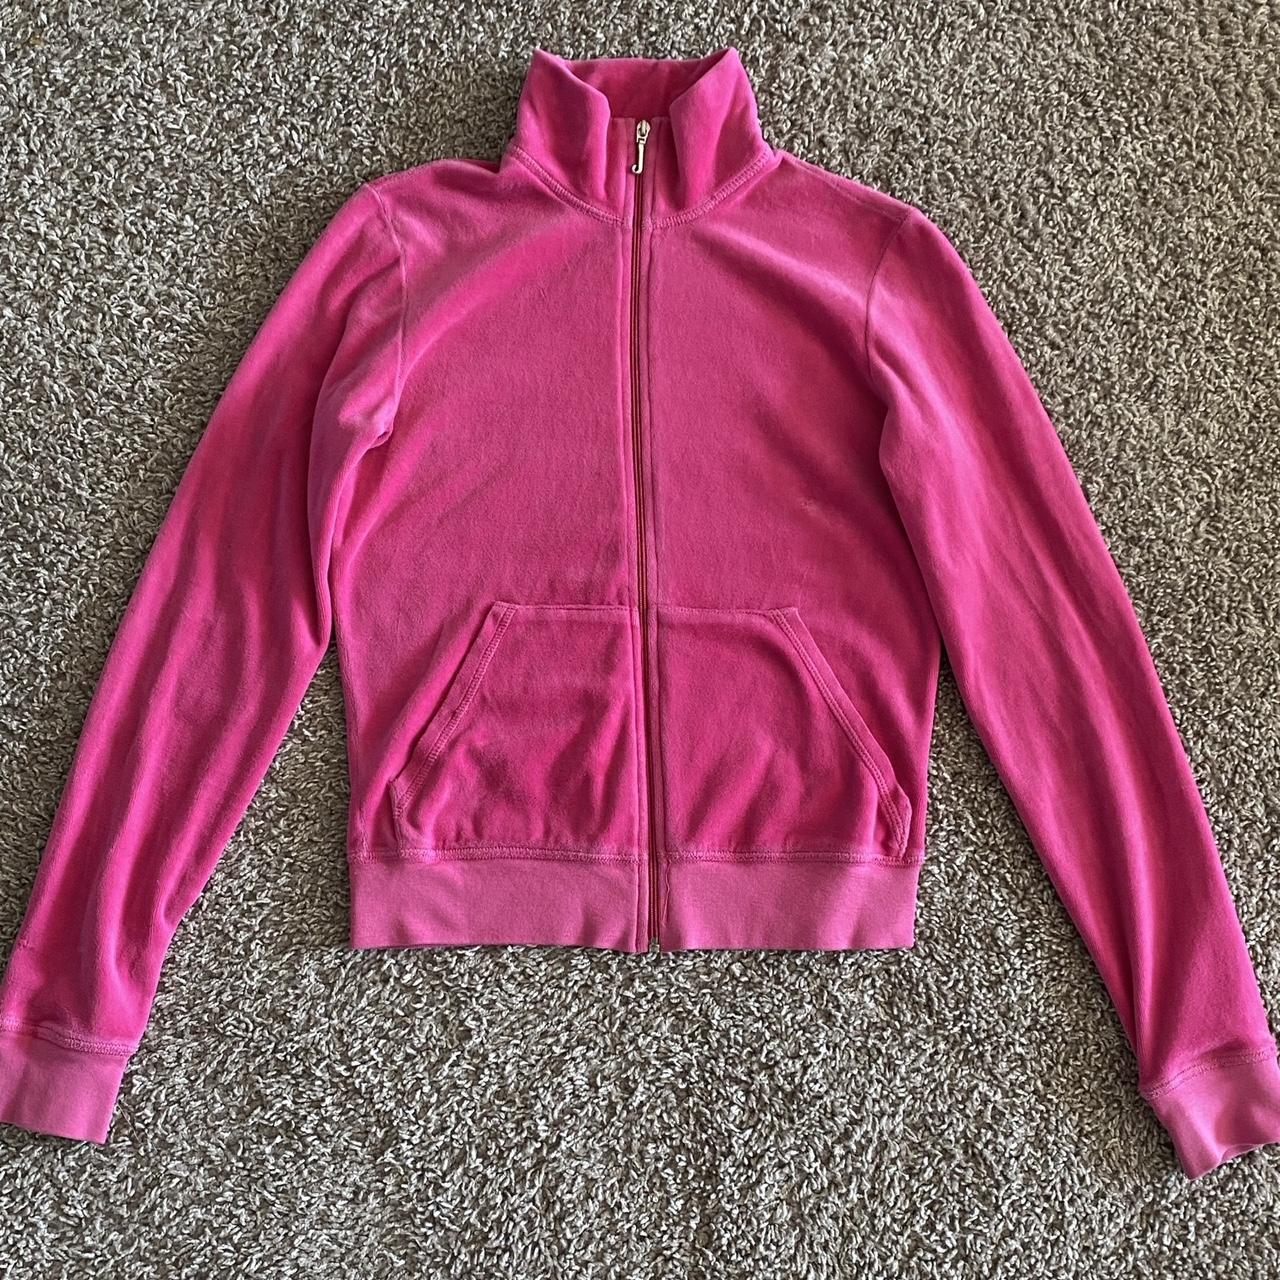 Pink juicy jacket - Depop